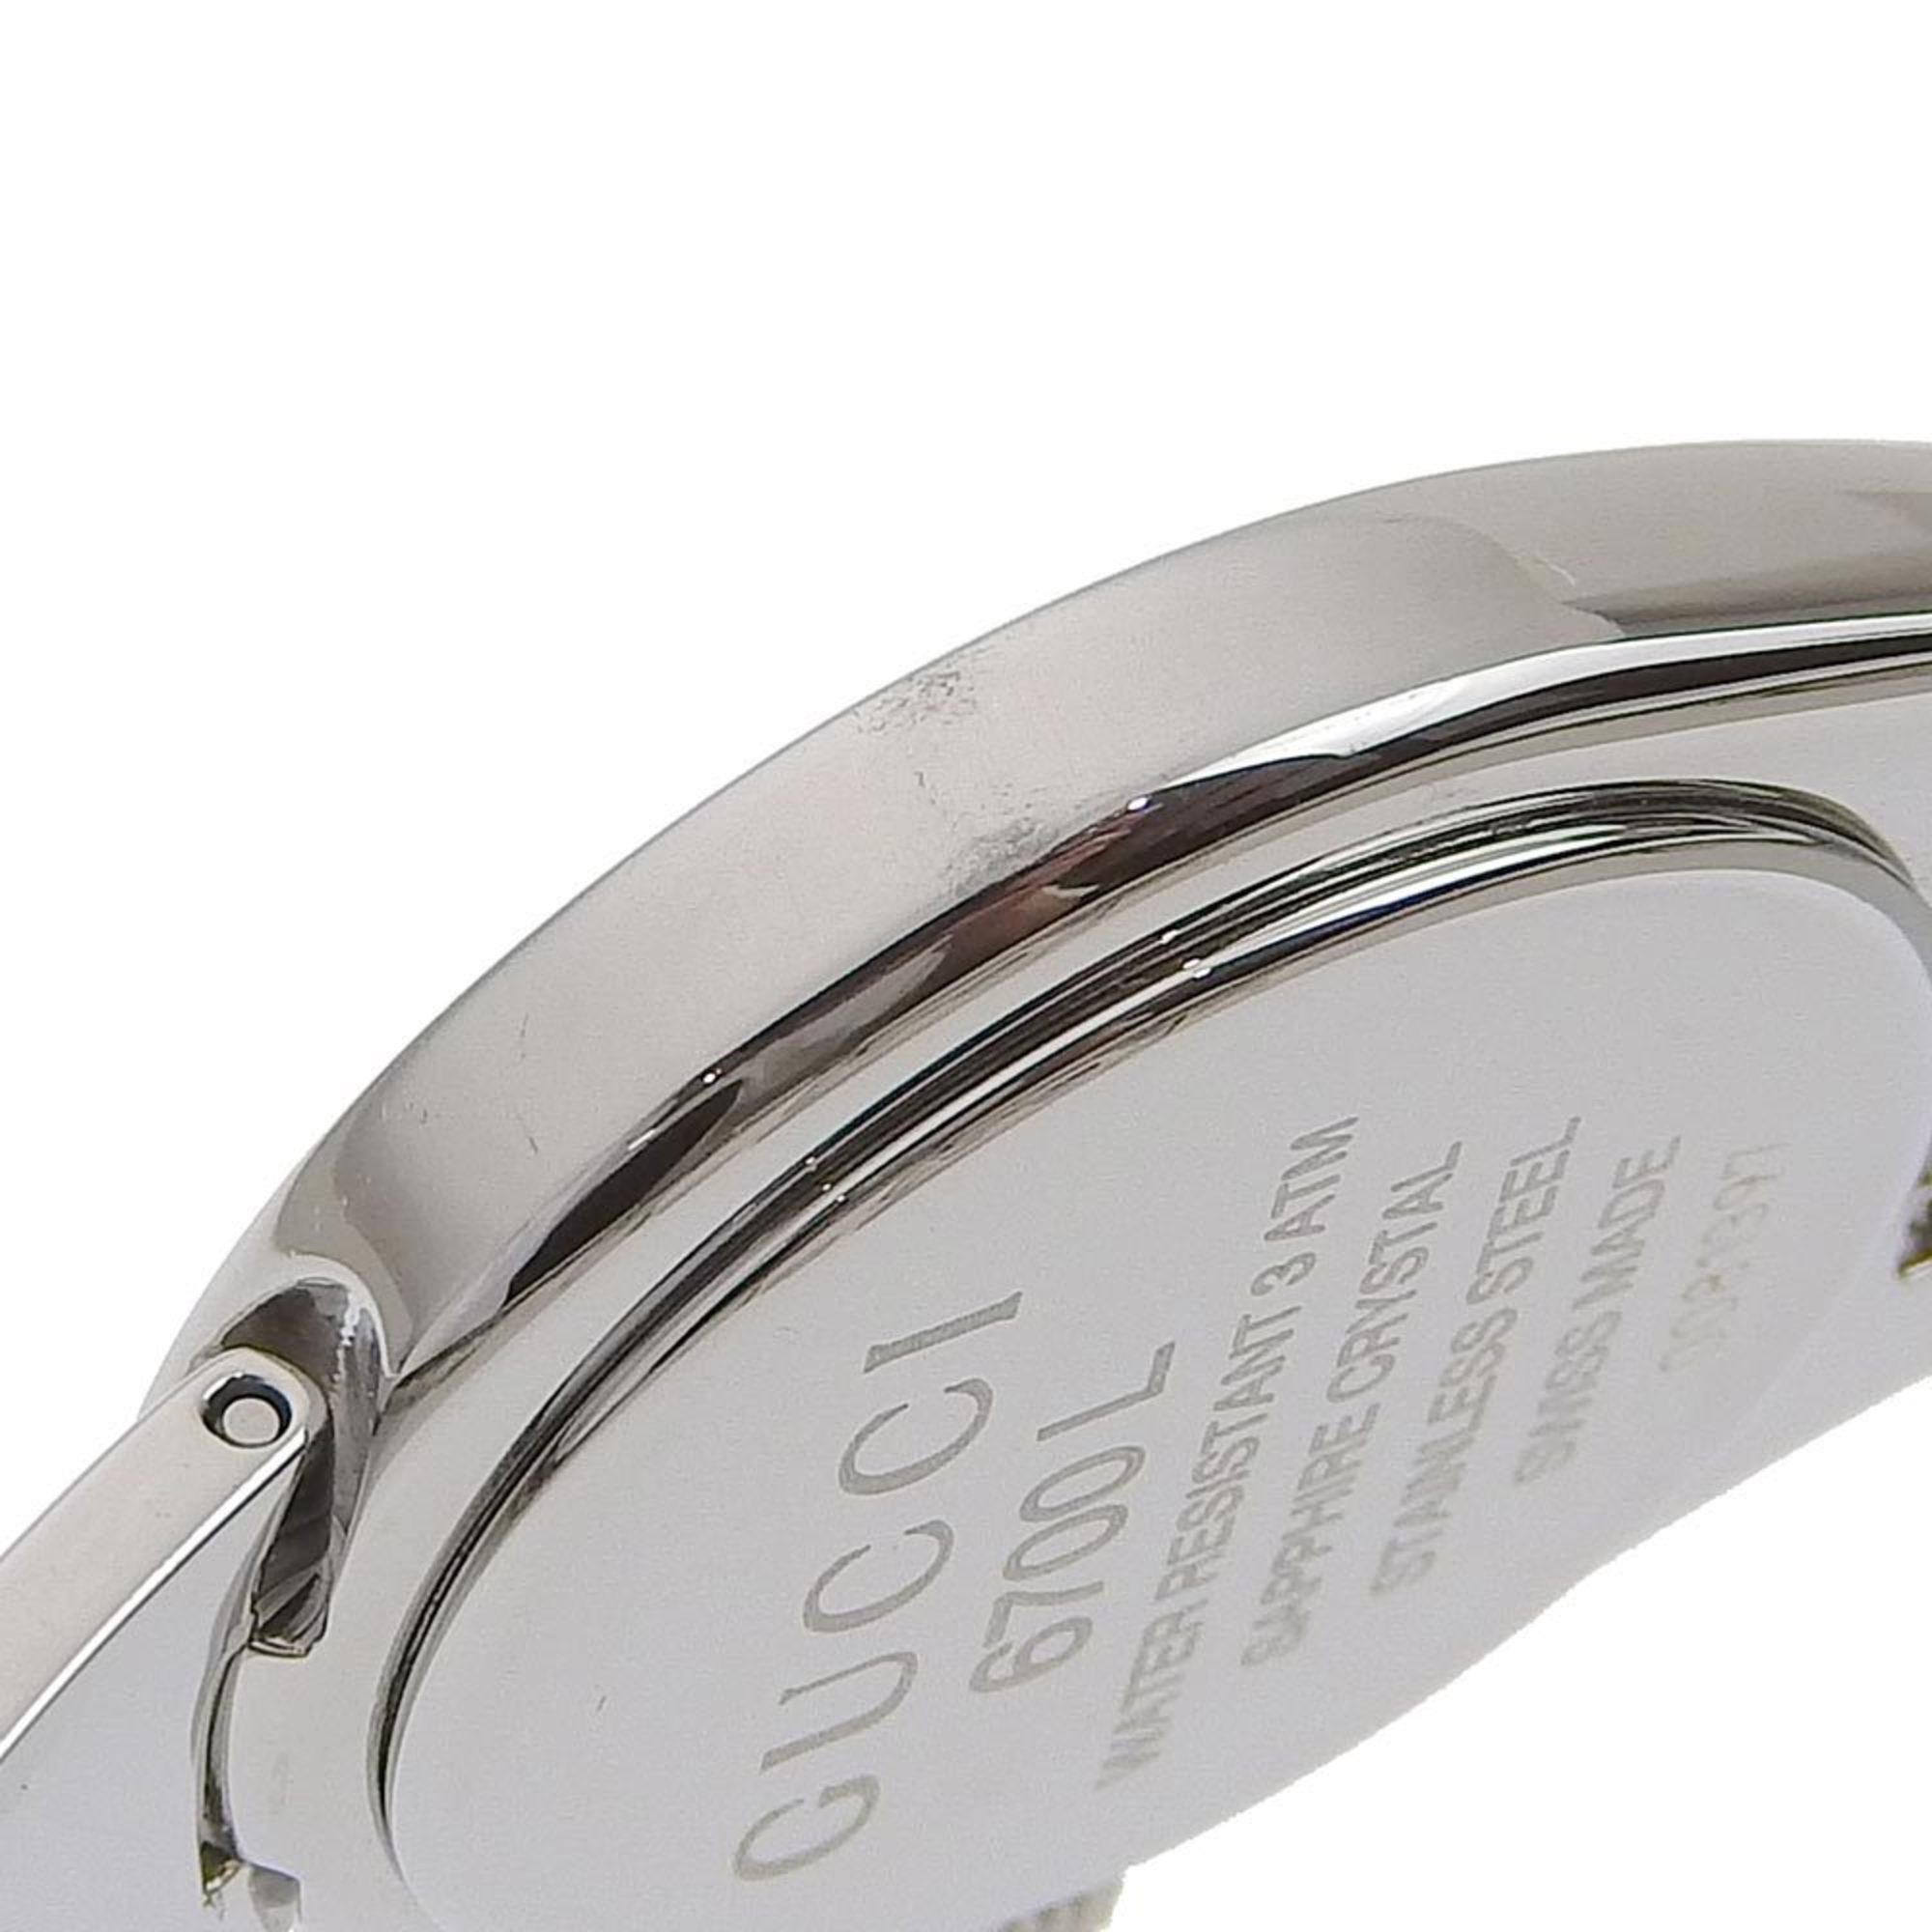 Gucci Watch 6700L Stainless Steel Silver Quartz Analog Display Ladies Black Dial